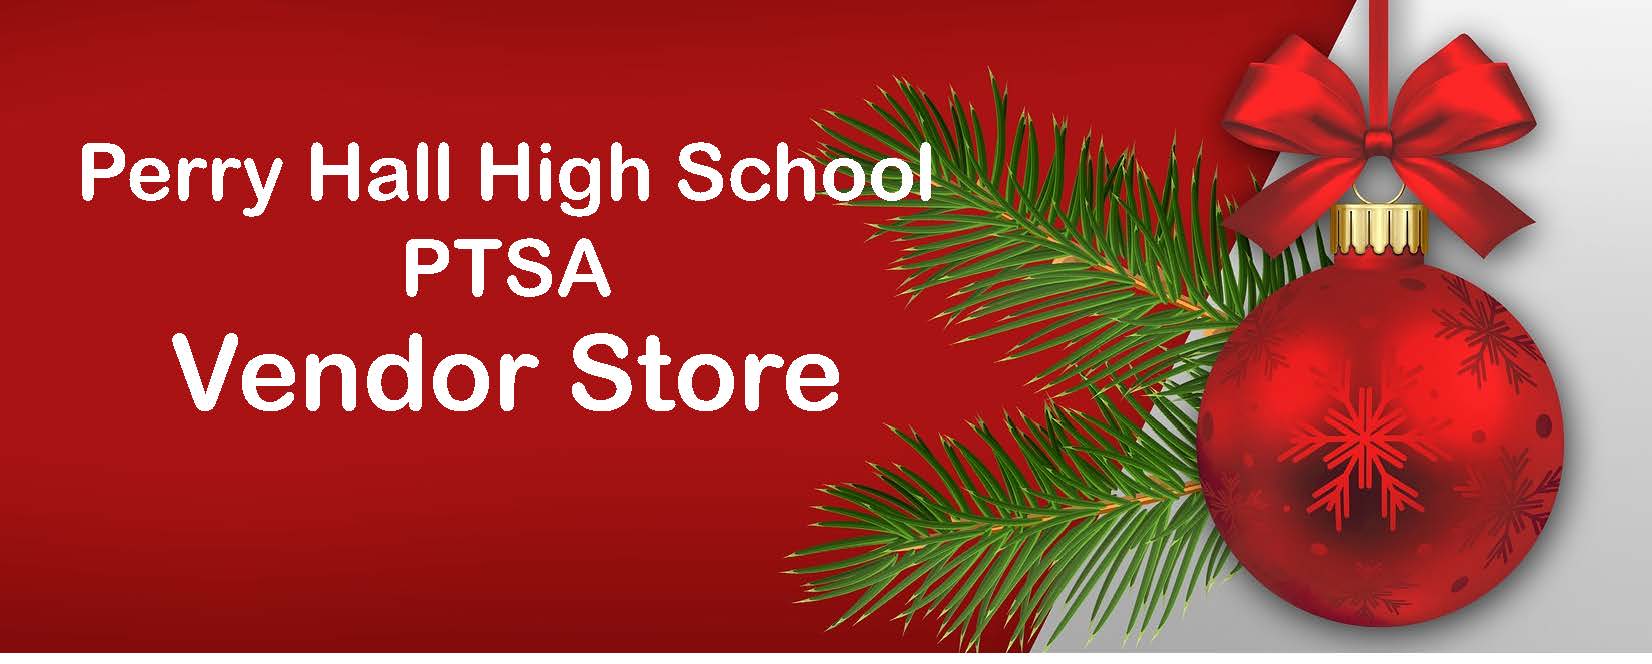 Perry Hall High School PTSA Vendor Store